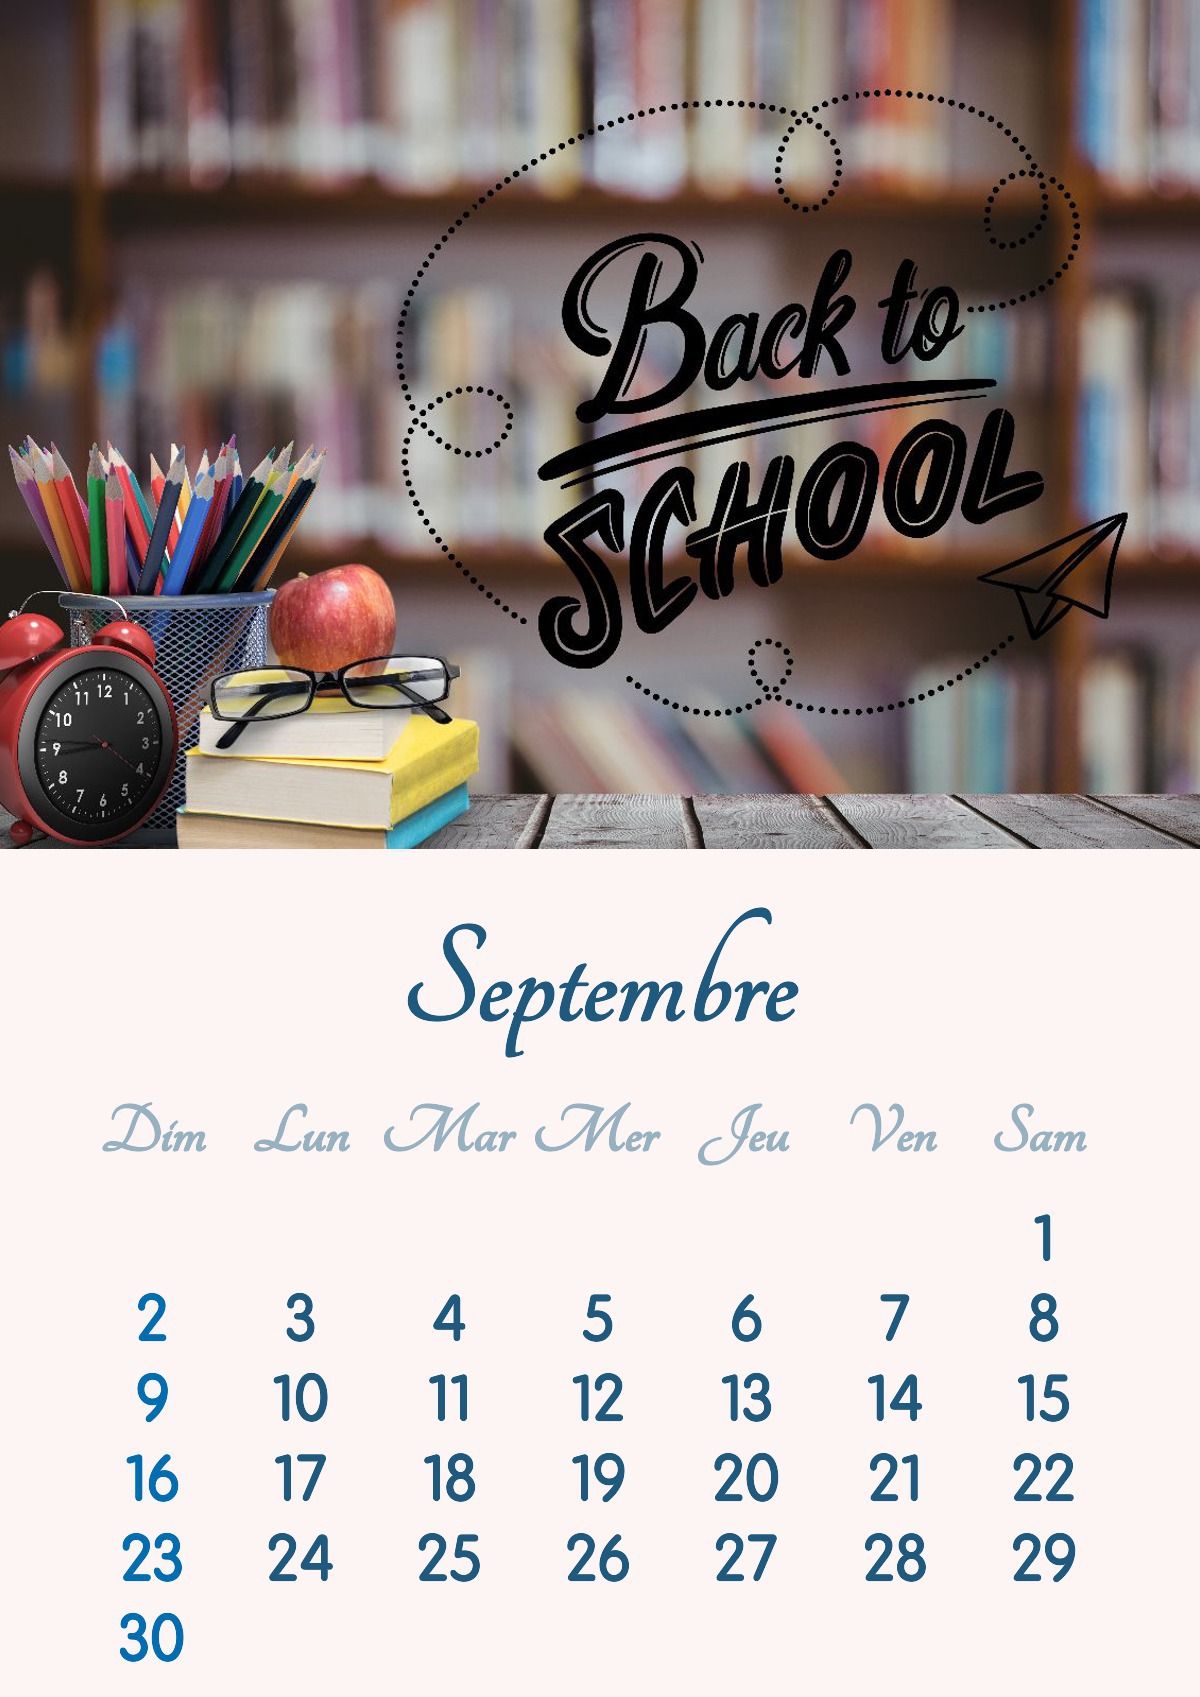 September 2018 calendar printable in A4 Photo frame effect